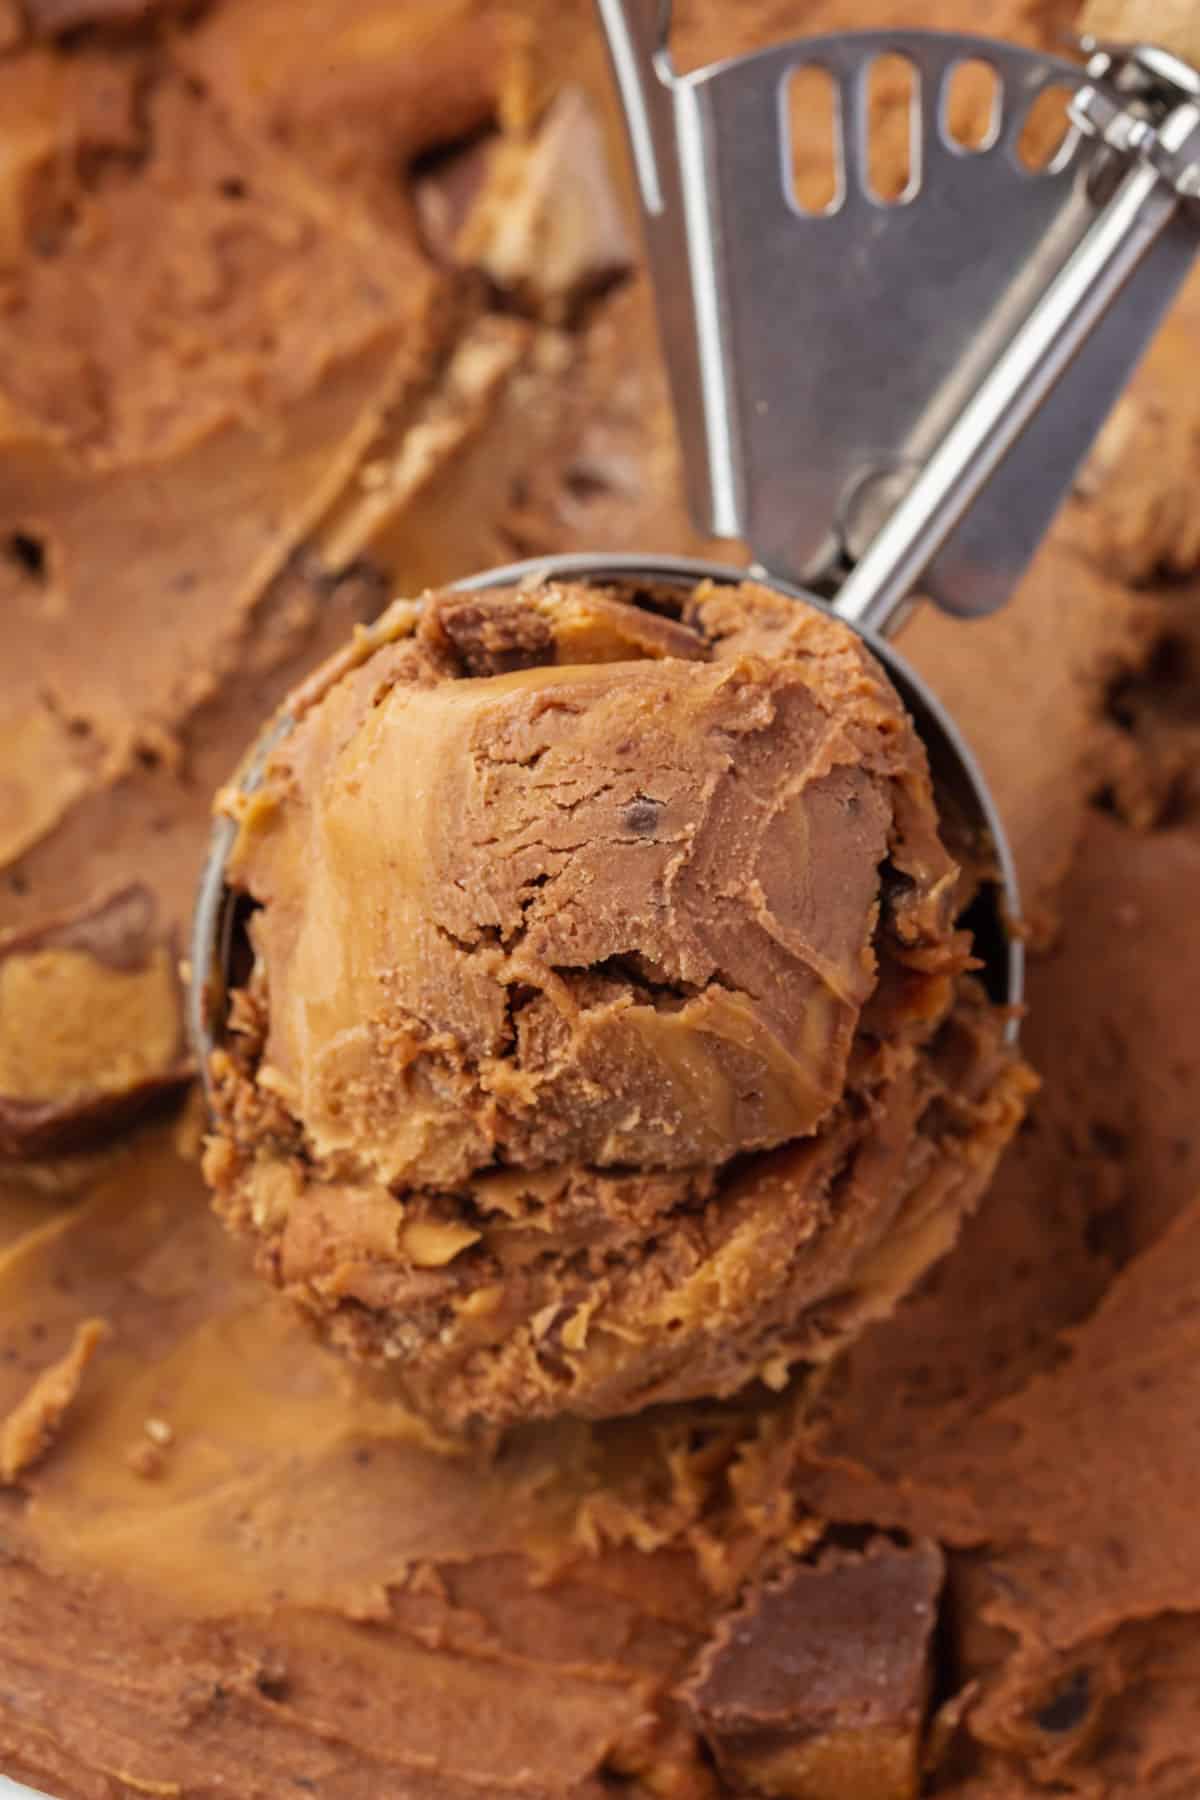 A scooper full of chocolate peanut butter ice cream in it.